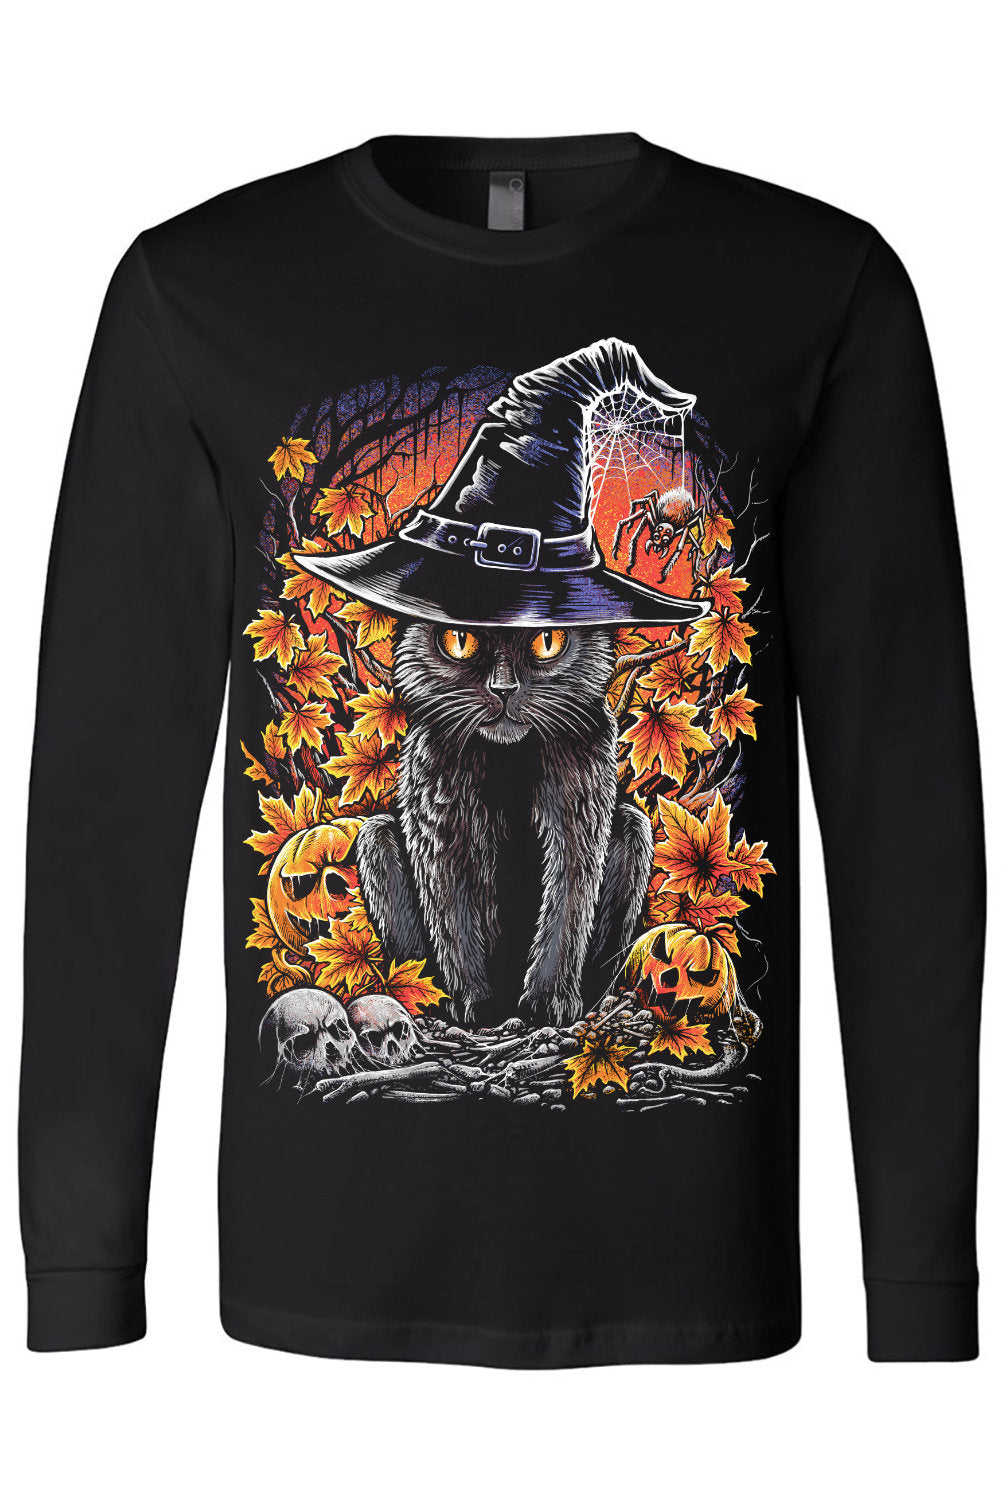 Witch's Familiar T-shirt